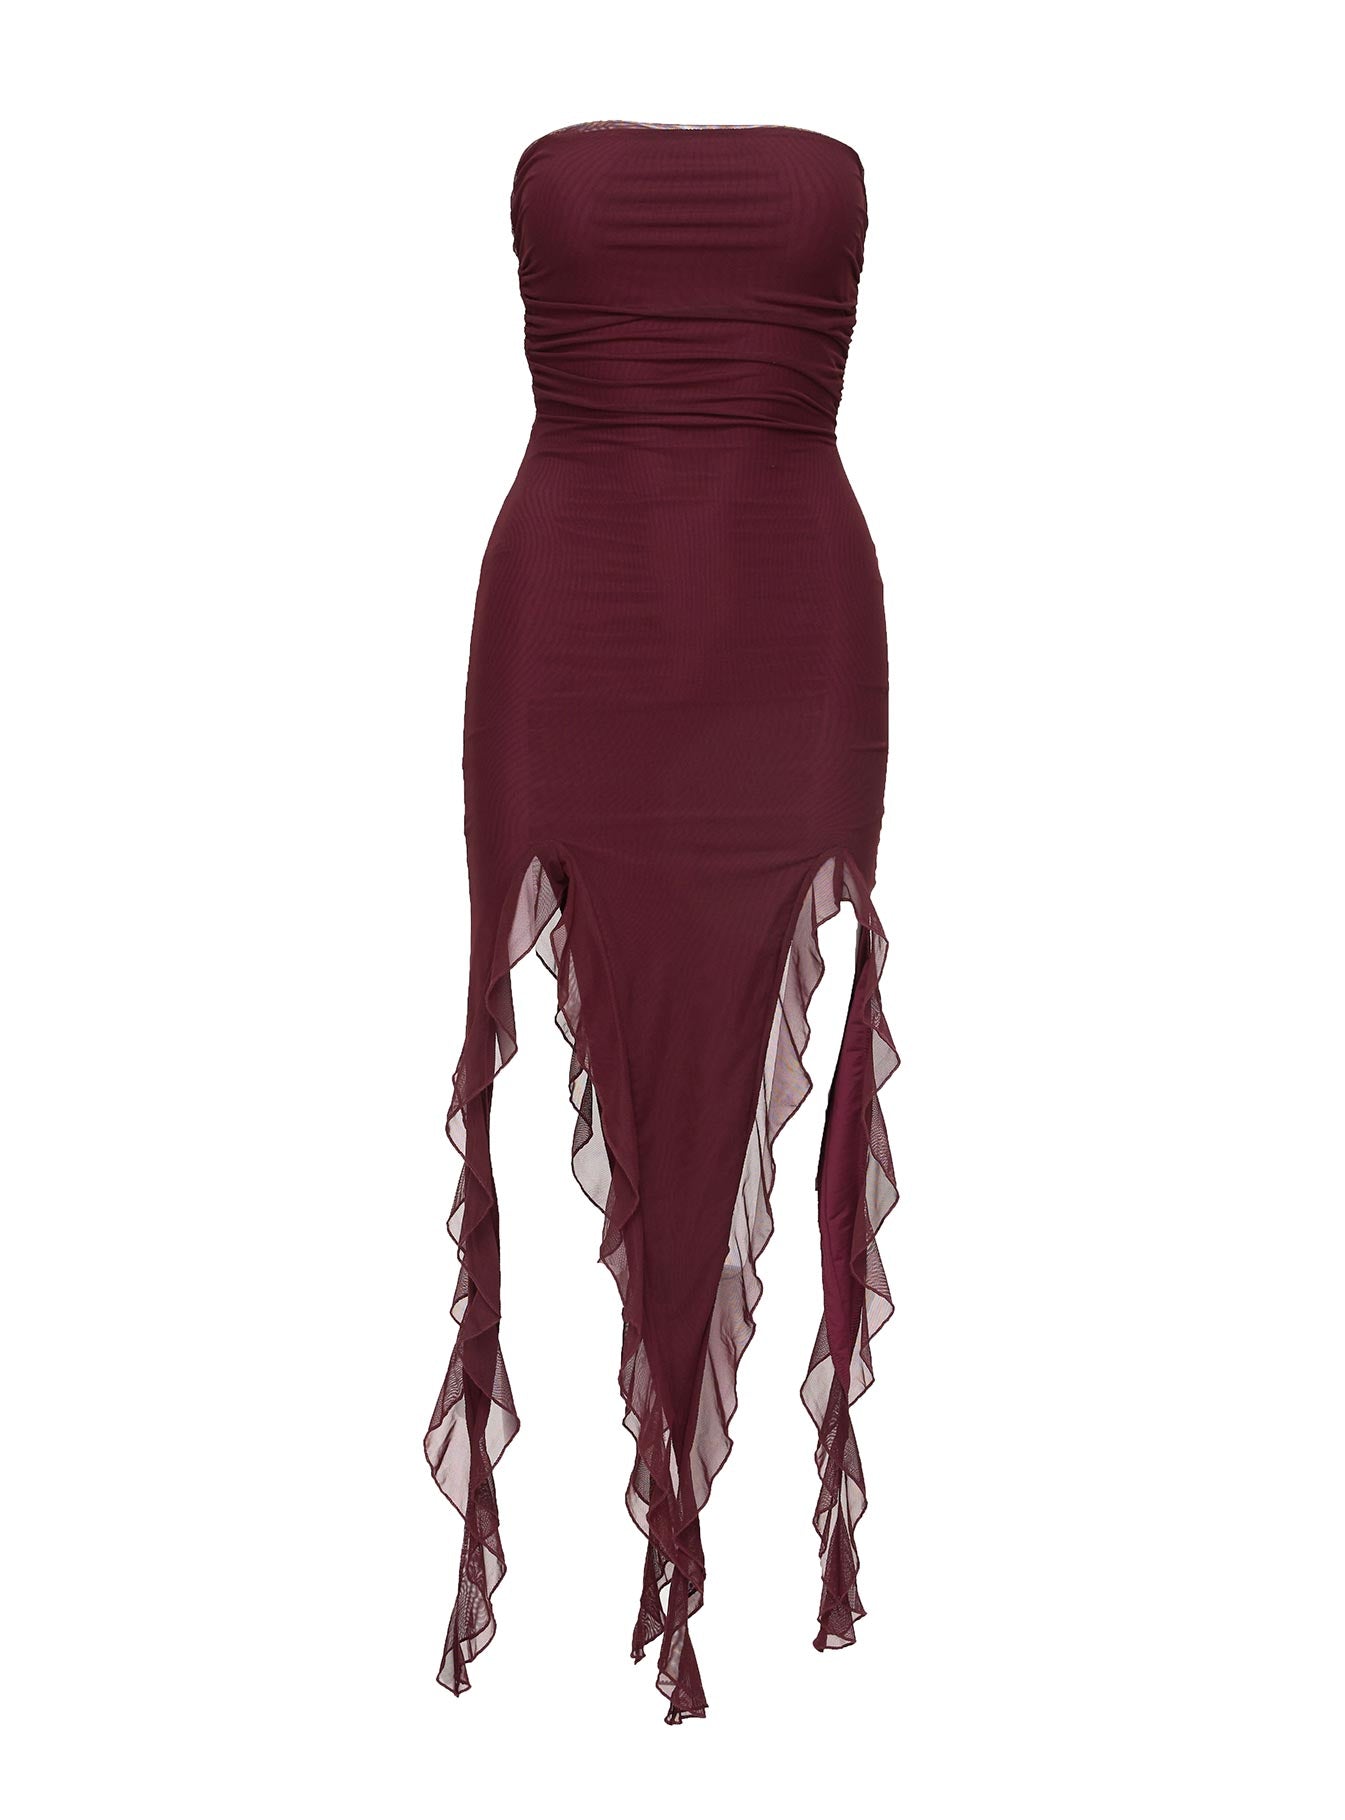 Shop Formal Dress - Marisol Midi Dress Brown third image